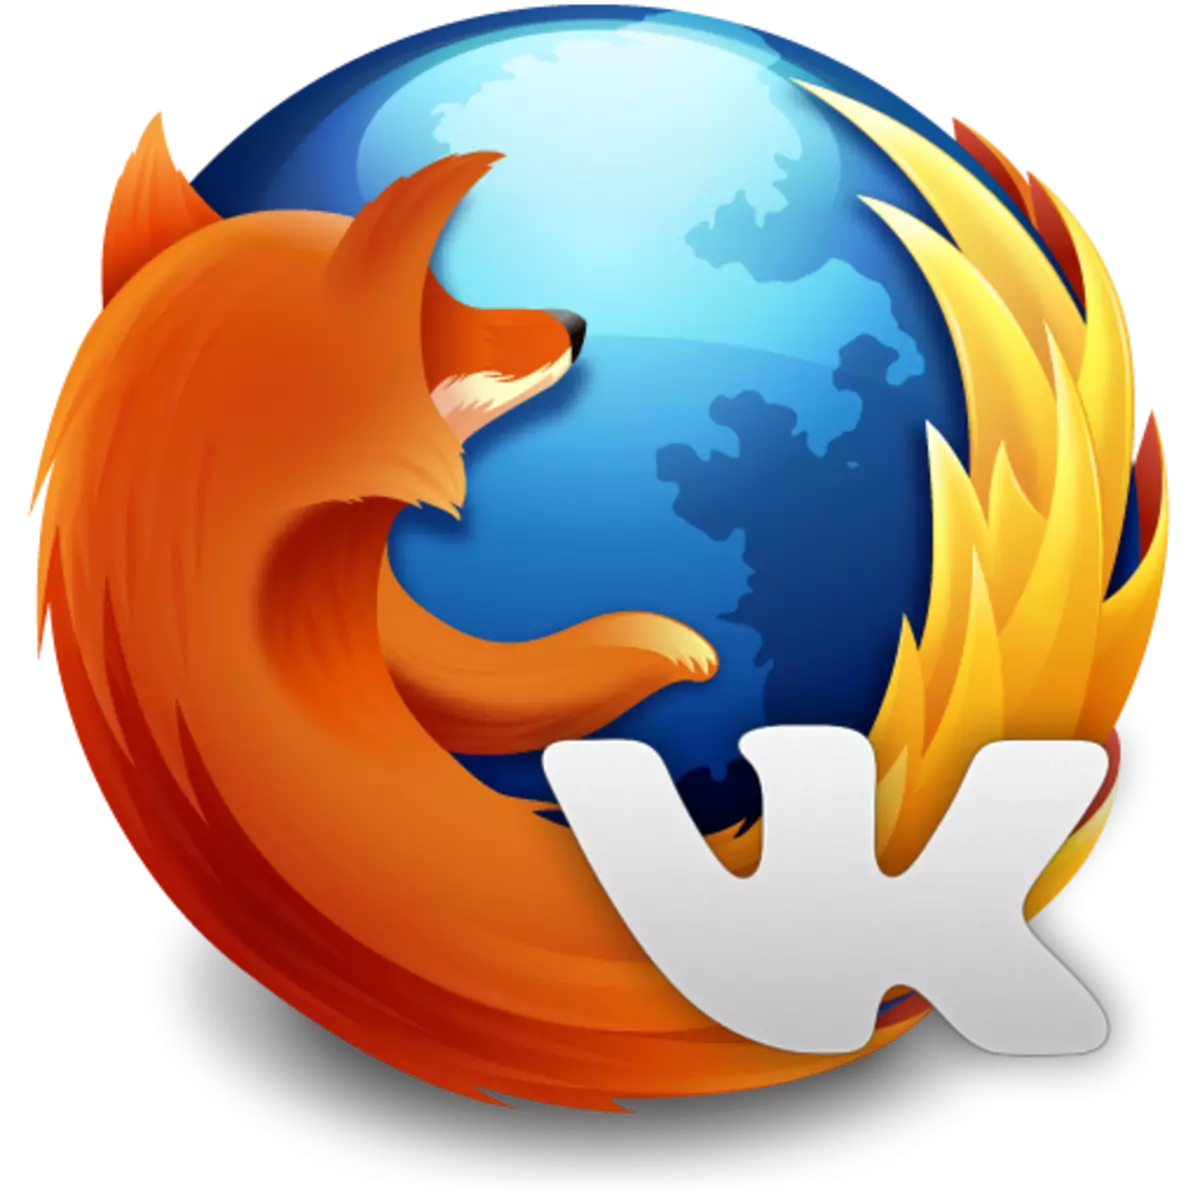 I-Firefox Plugins Ukulanda Umculo VKontakte